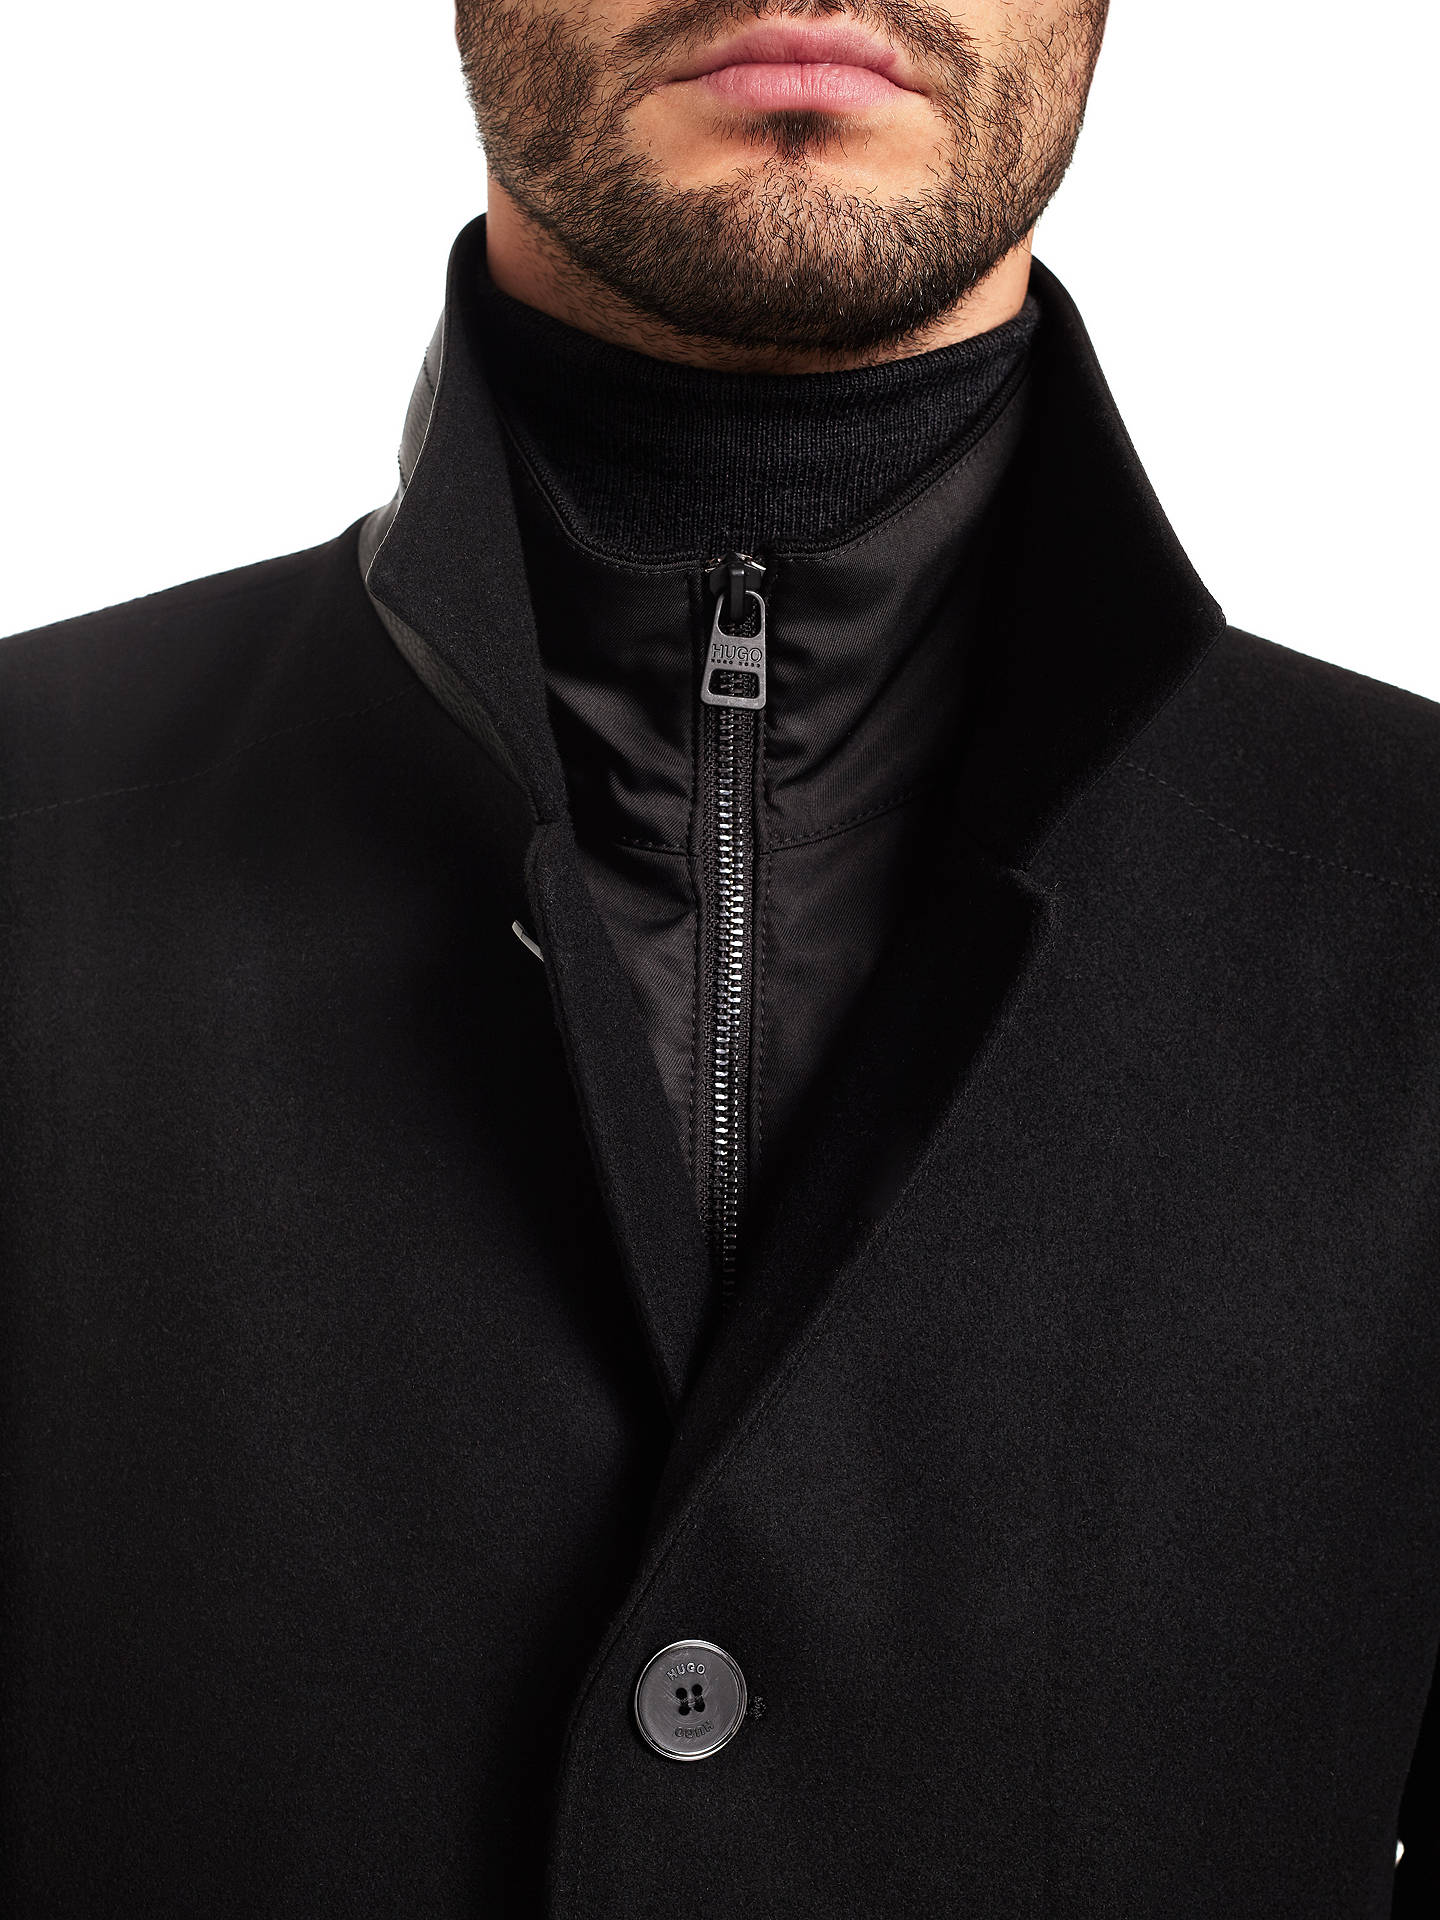 HUGO by Hugo Boss Barelto Coat, Black at John Lewis & Partners